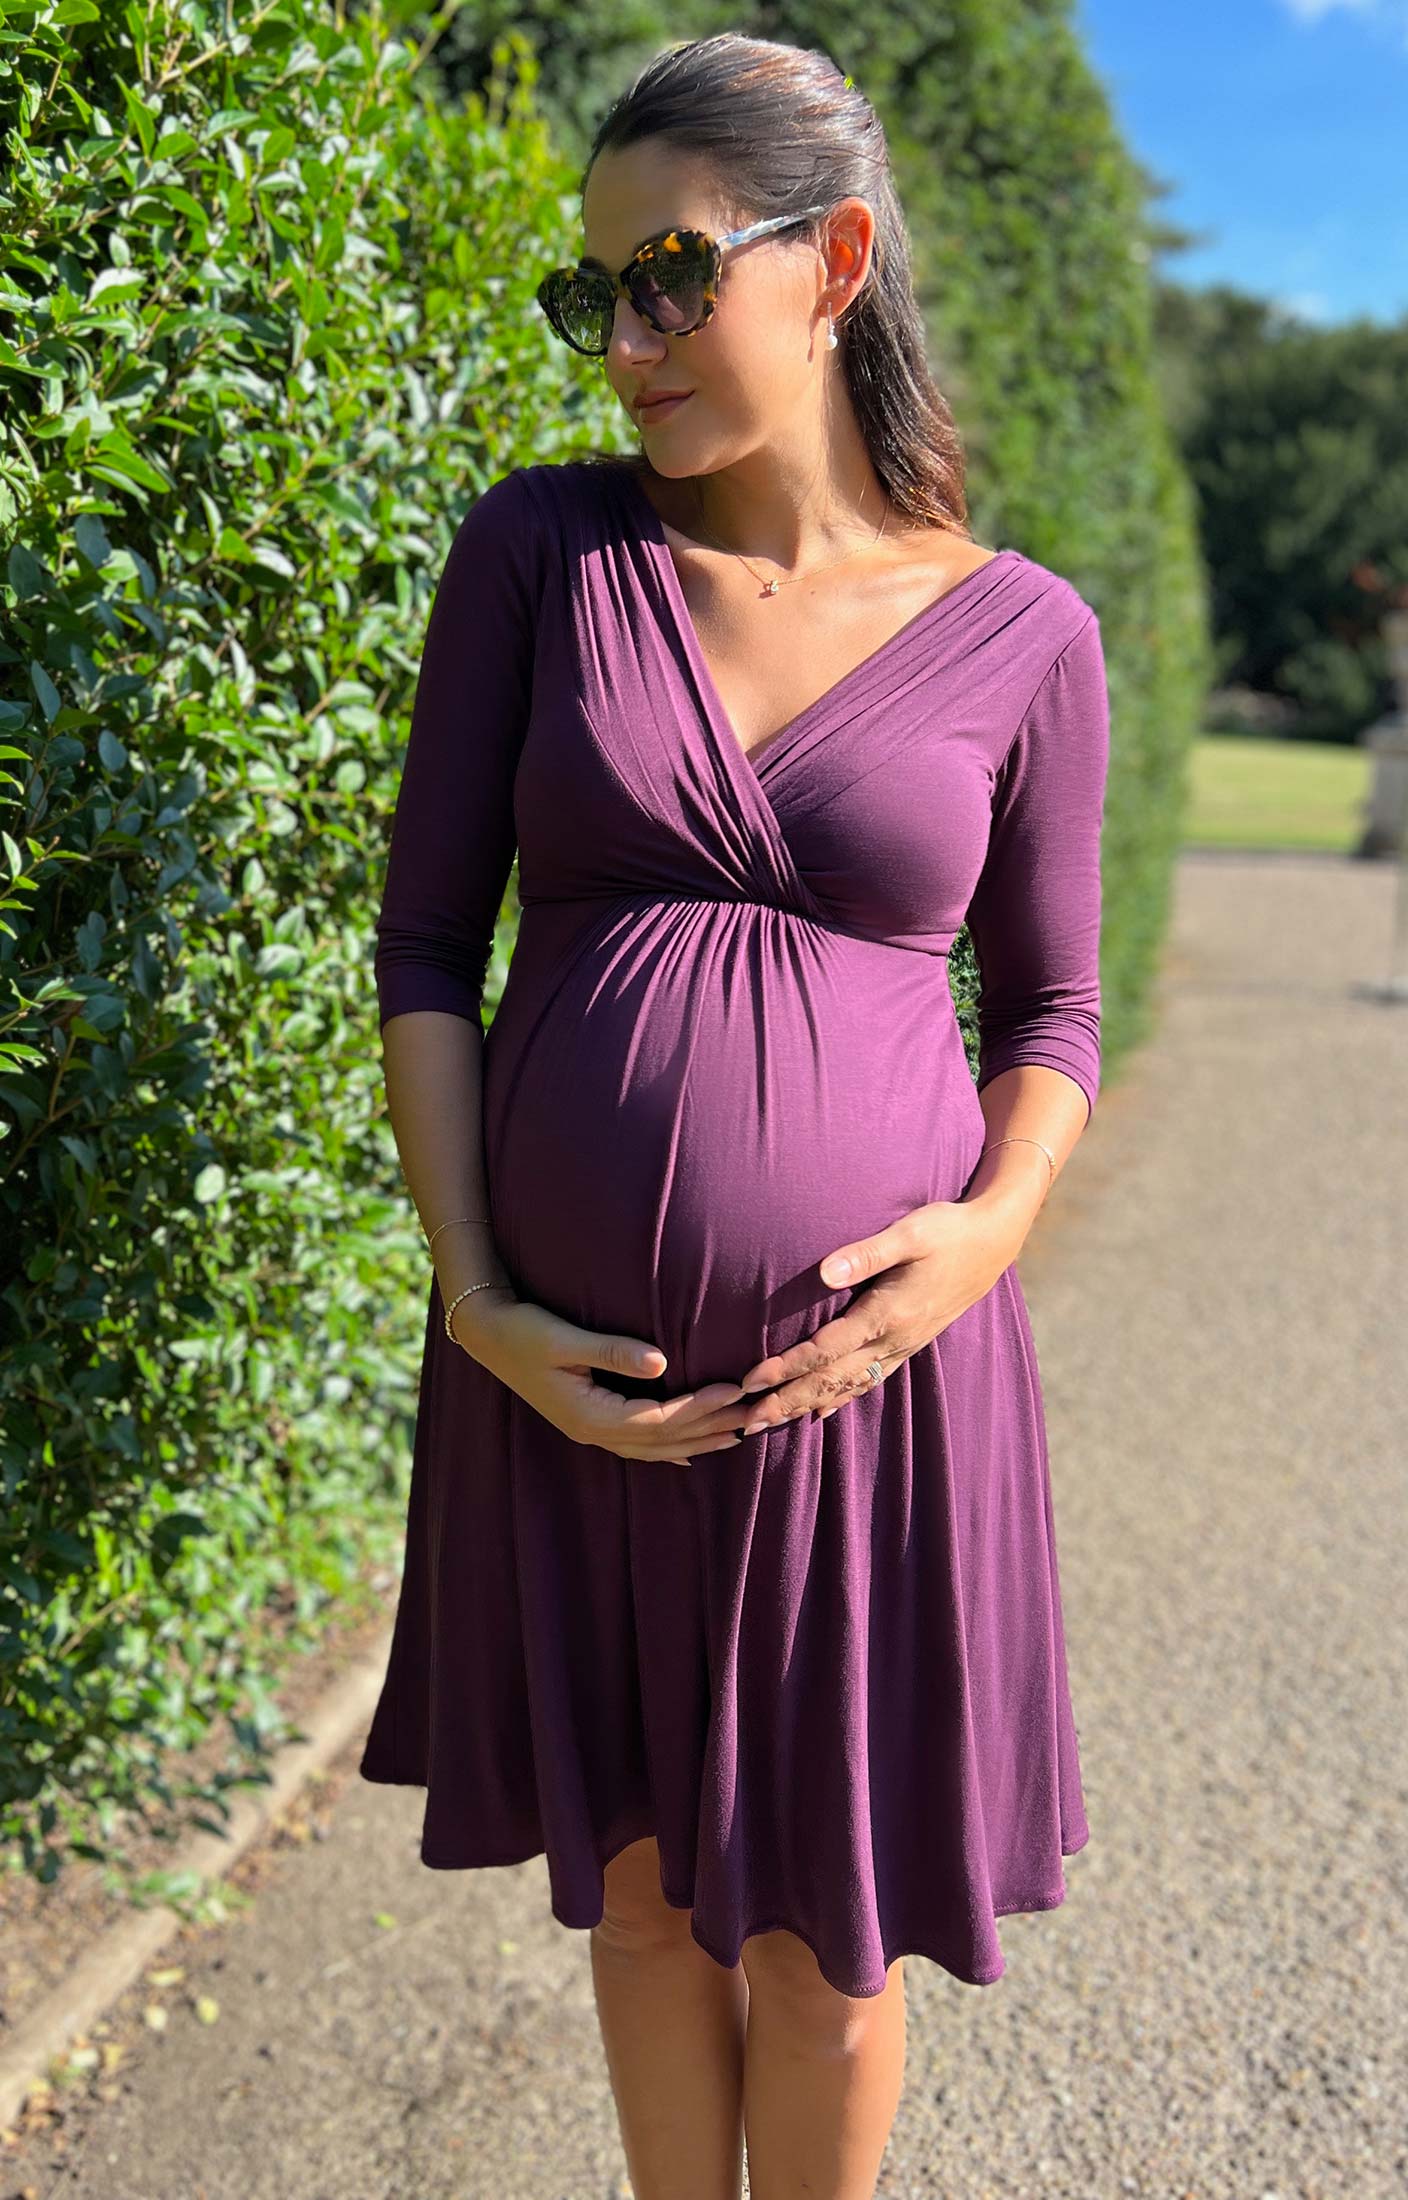 Buy Best Maternity Gown Dress | Pregnancy Gown Dress Online for Women|  Maternity Shoot Dress